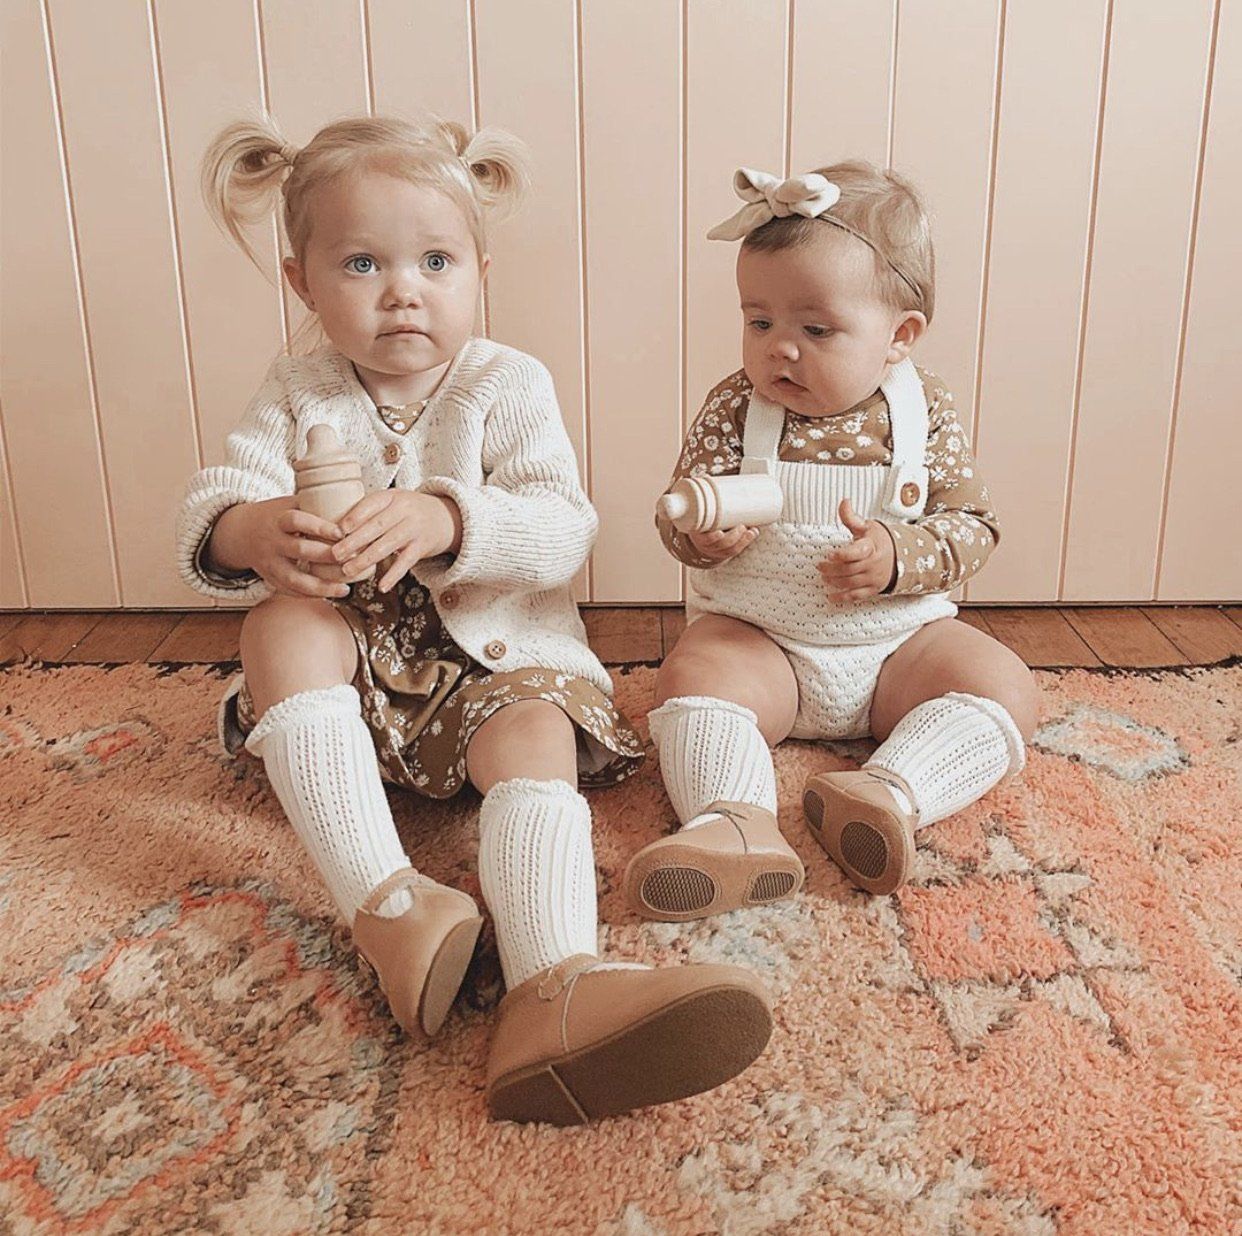 Toddler & Kids Leather T-bar - Beige - Elegant beige leather T-bar shoes | Sadie Baby 